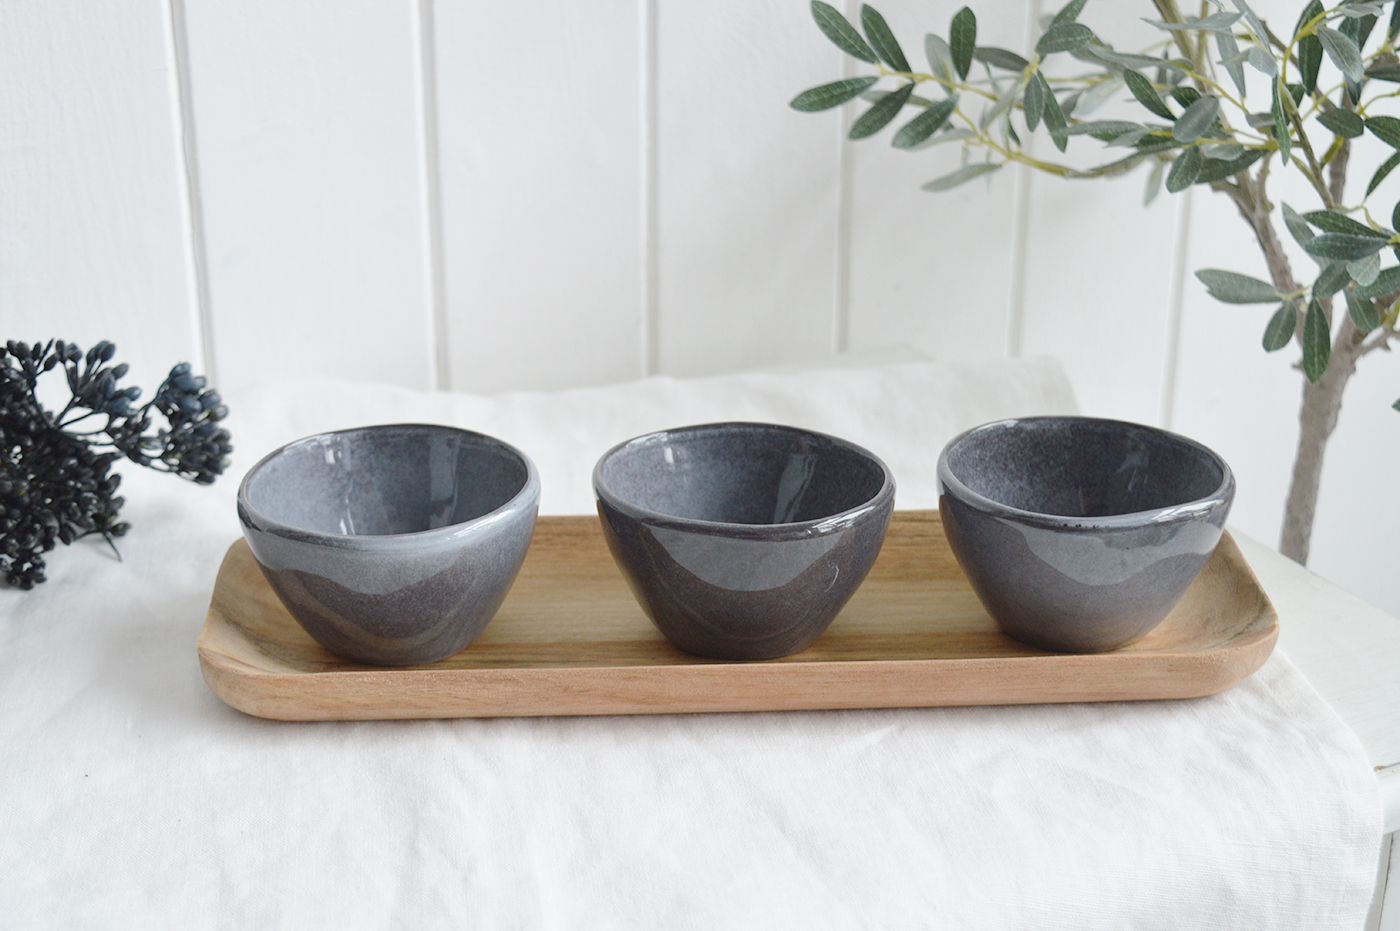 White Coastal Furniture and accessories for the home. Pilgrim Ceramic Bowls - Small grey bowl for New England, farmhouse,  Country and coastal homes and interior decor